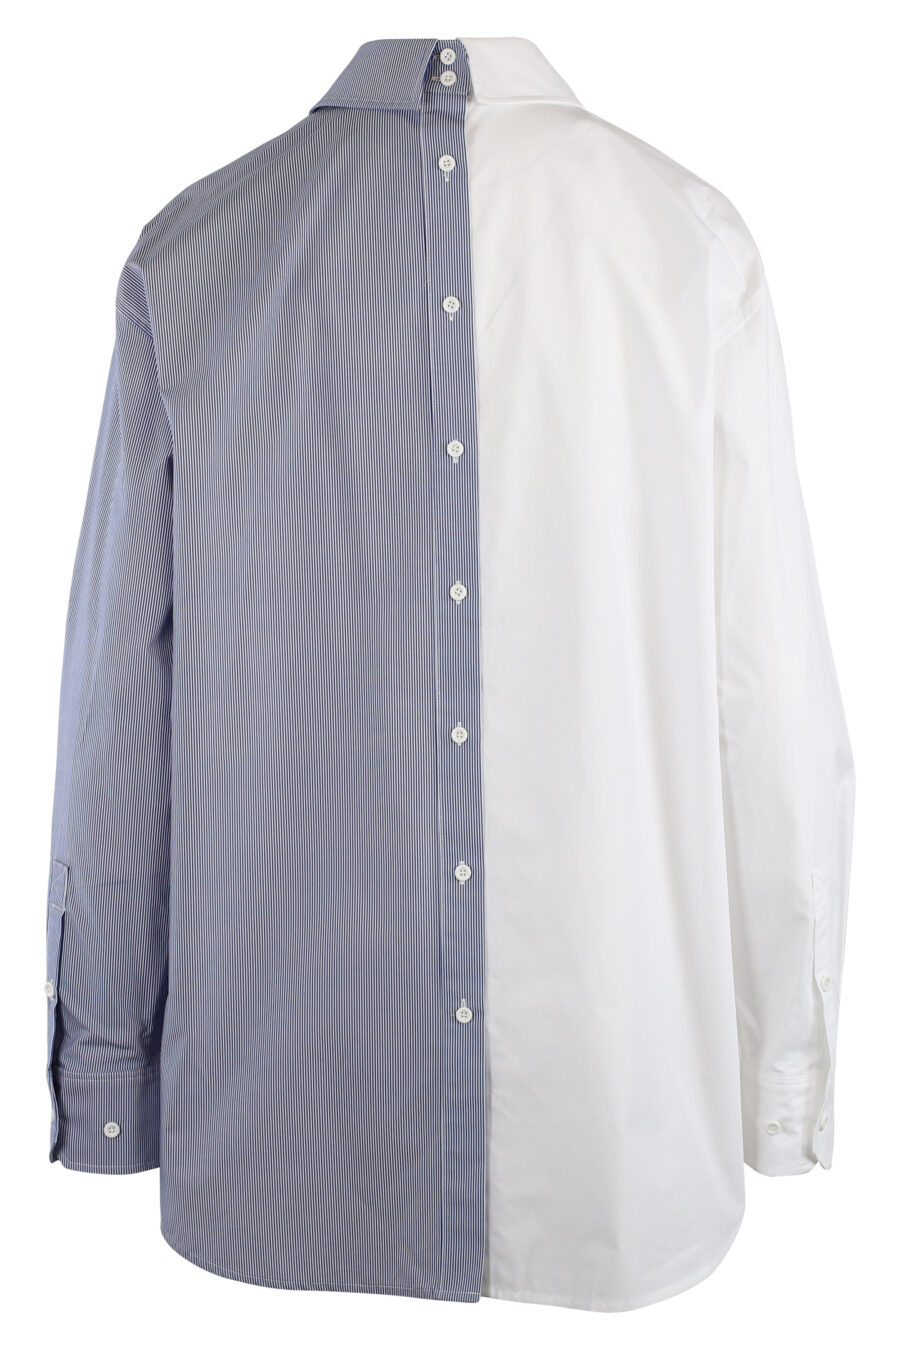 Chemise bicolore bleue et blanche - IMG 5485